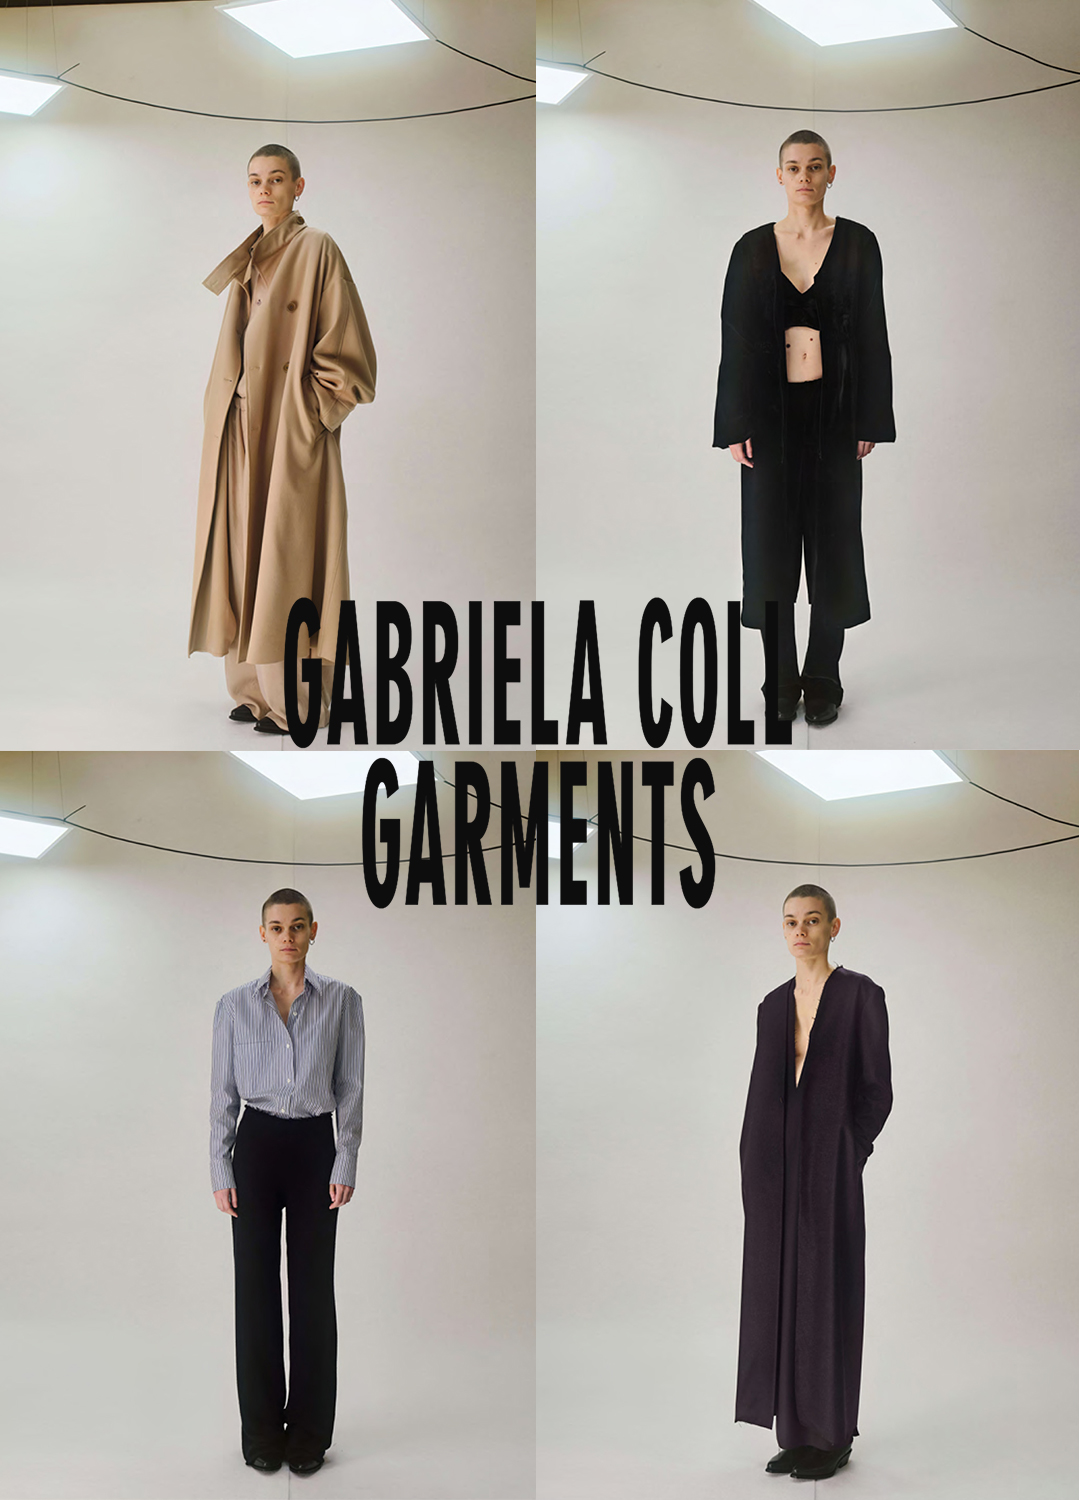 gabriela coll garments ガブリエラコールガーメンツ - buyfromhill.com